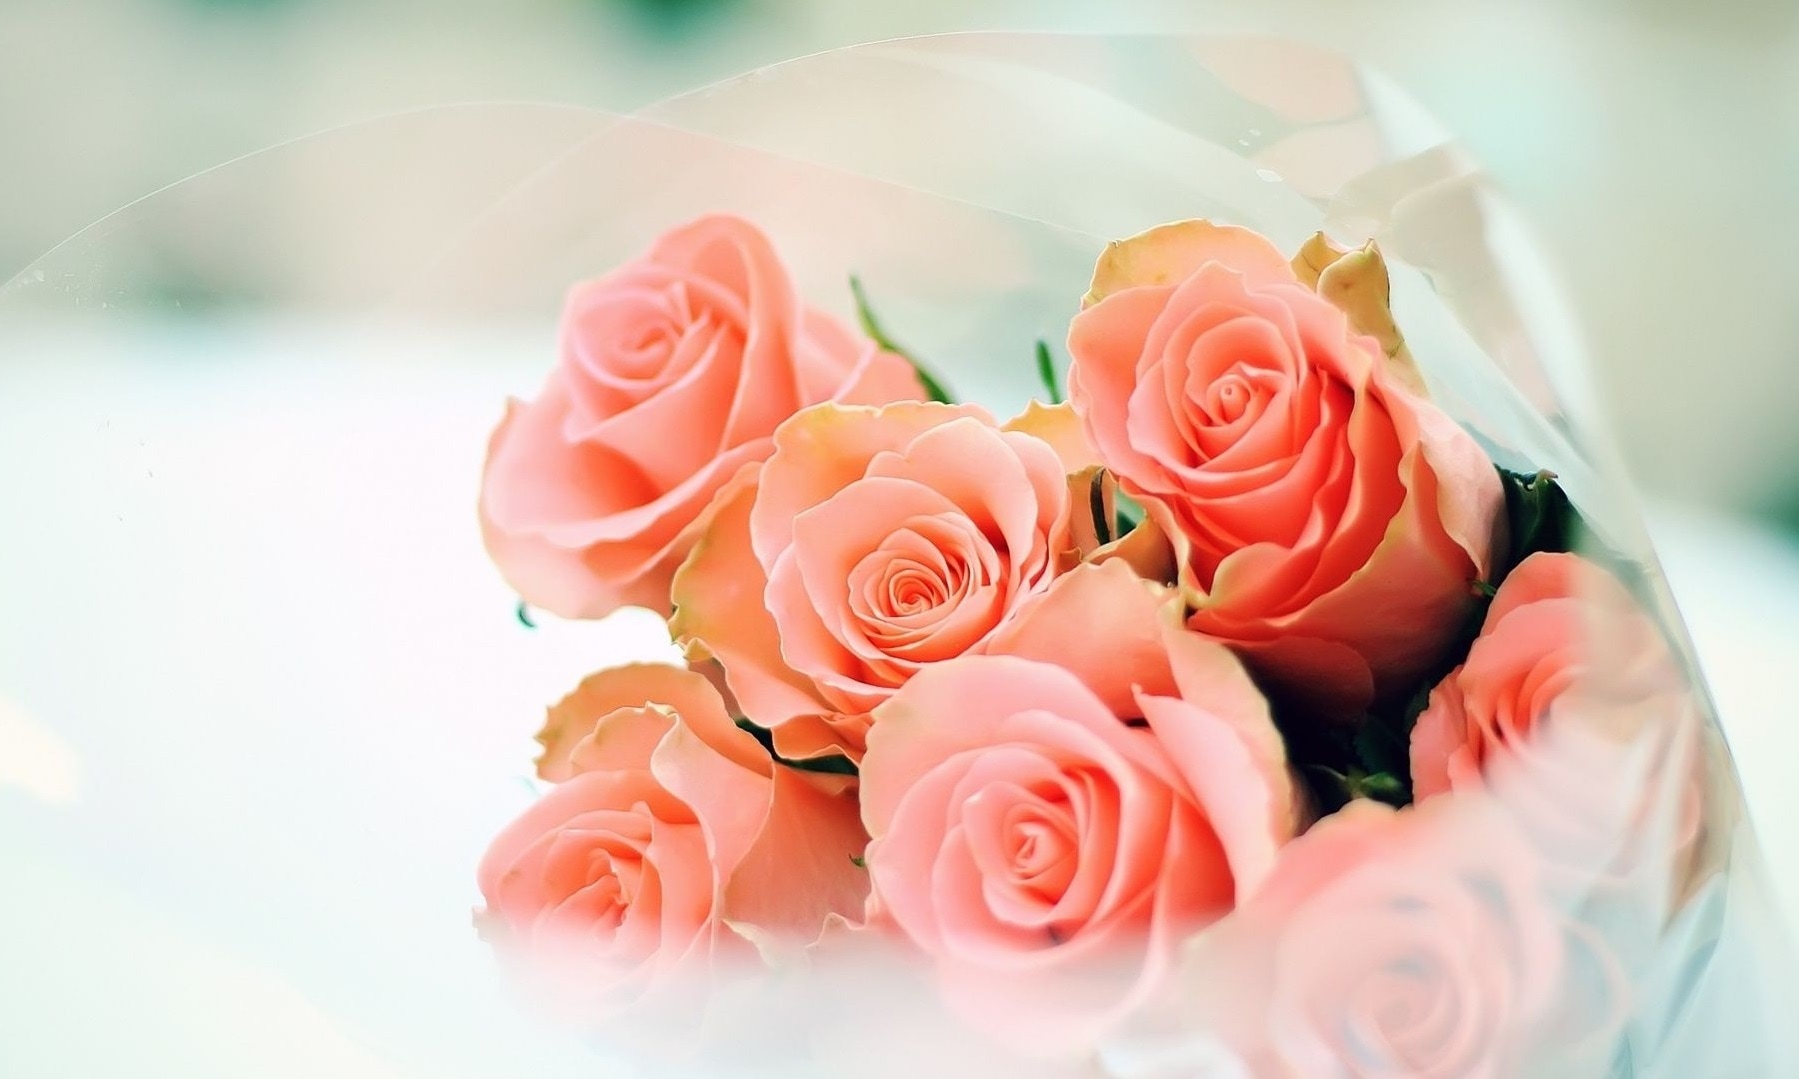 <p>পিচ গোলাপ: প্রেমের দিনে বা Rose Day-তে দেওয়ার জন্য দারুণ রং এটি। কারণ এর মানে, প্রেমে পড়েছেন। কিন্তু বলতে লজ্জা পাচ্ছেন। </p>